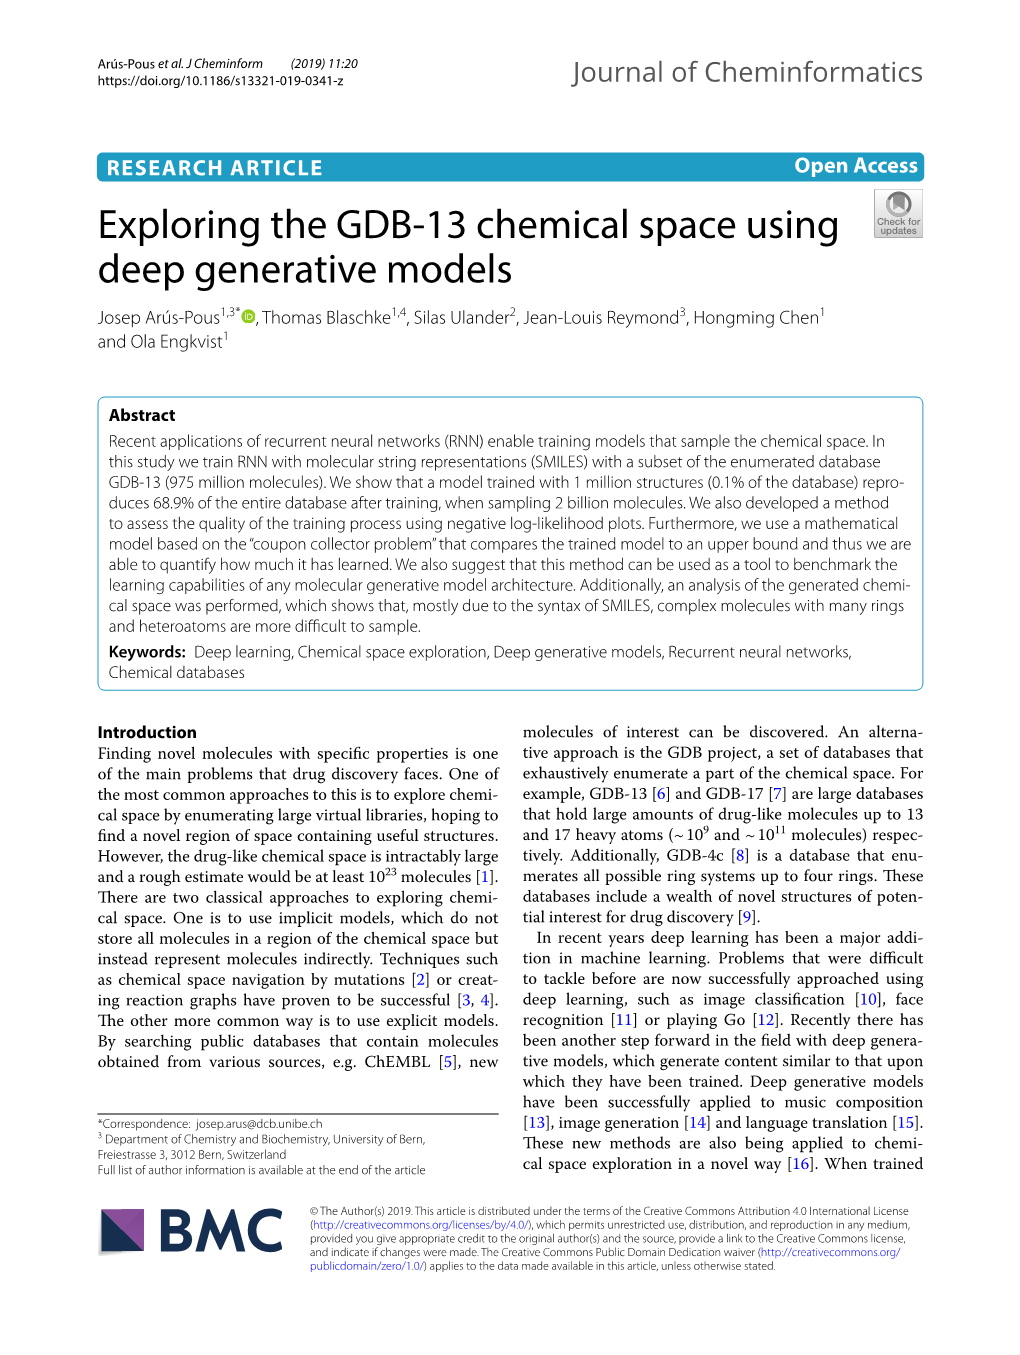 Exploring the GDB-13 Chemical Space Using Deep Generative Models